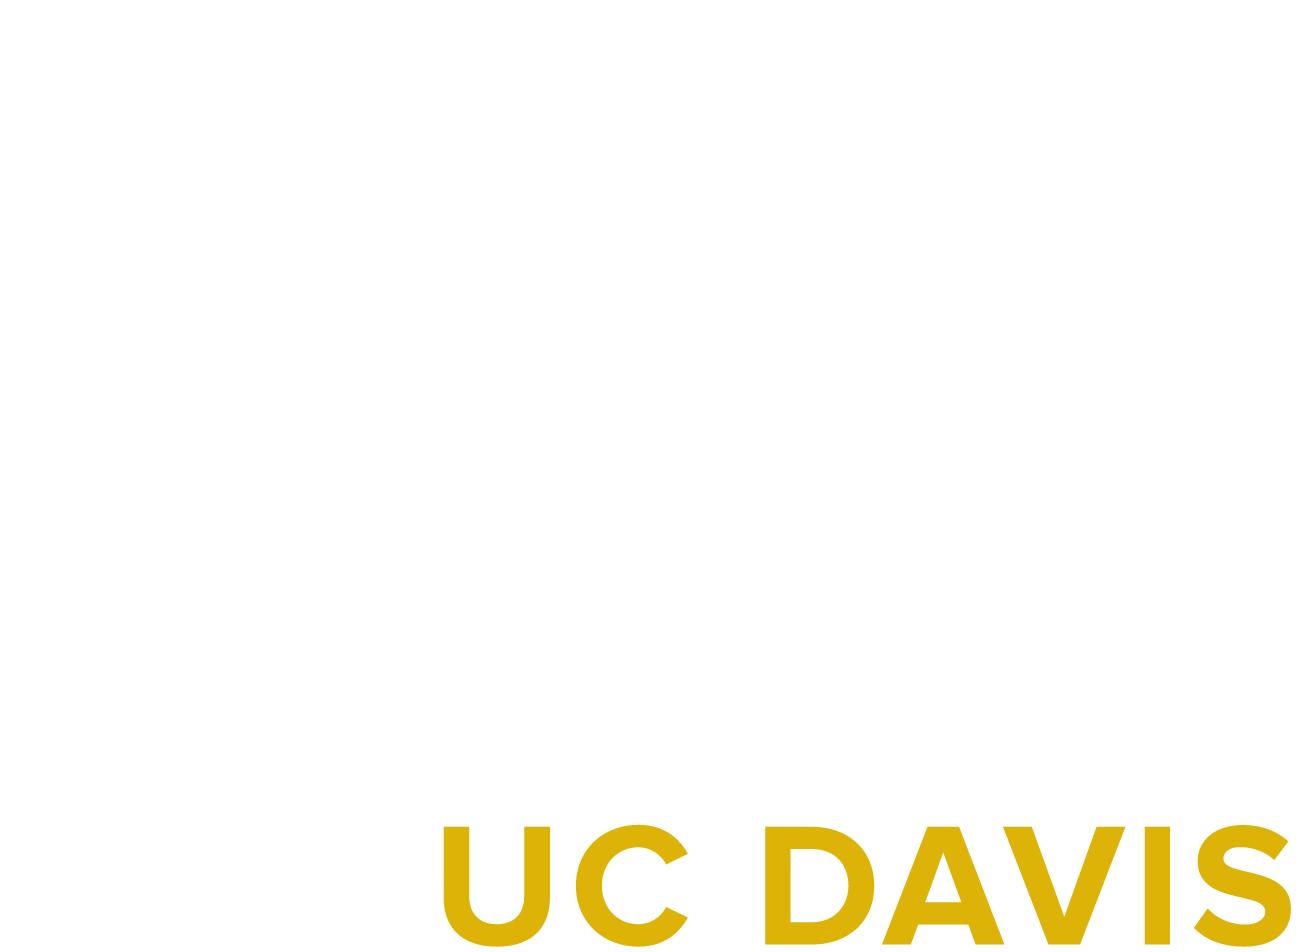 ucpath logo in white